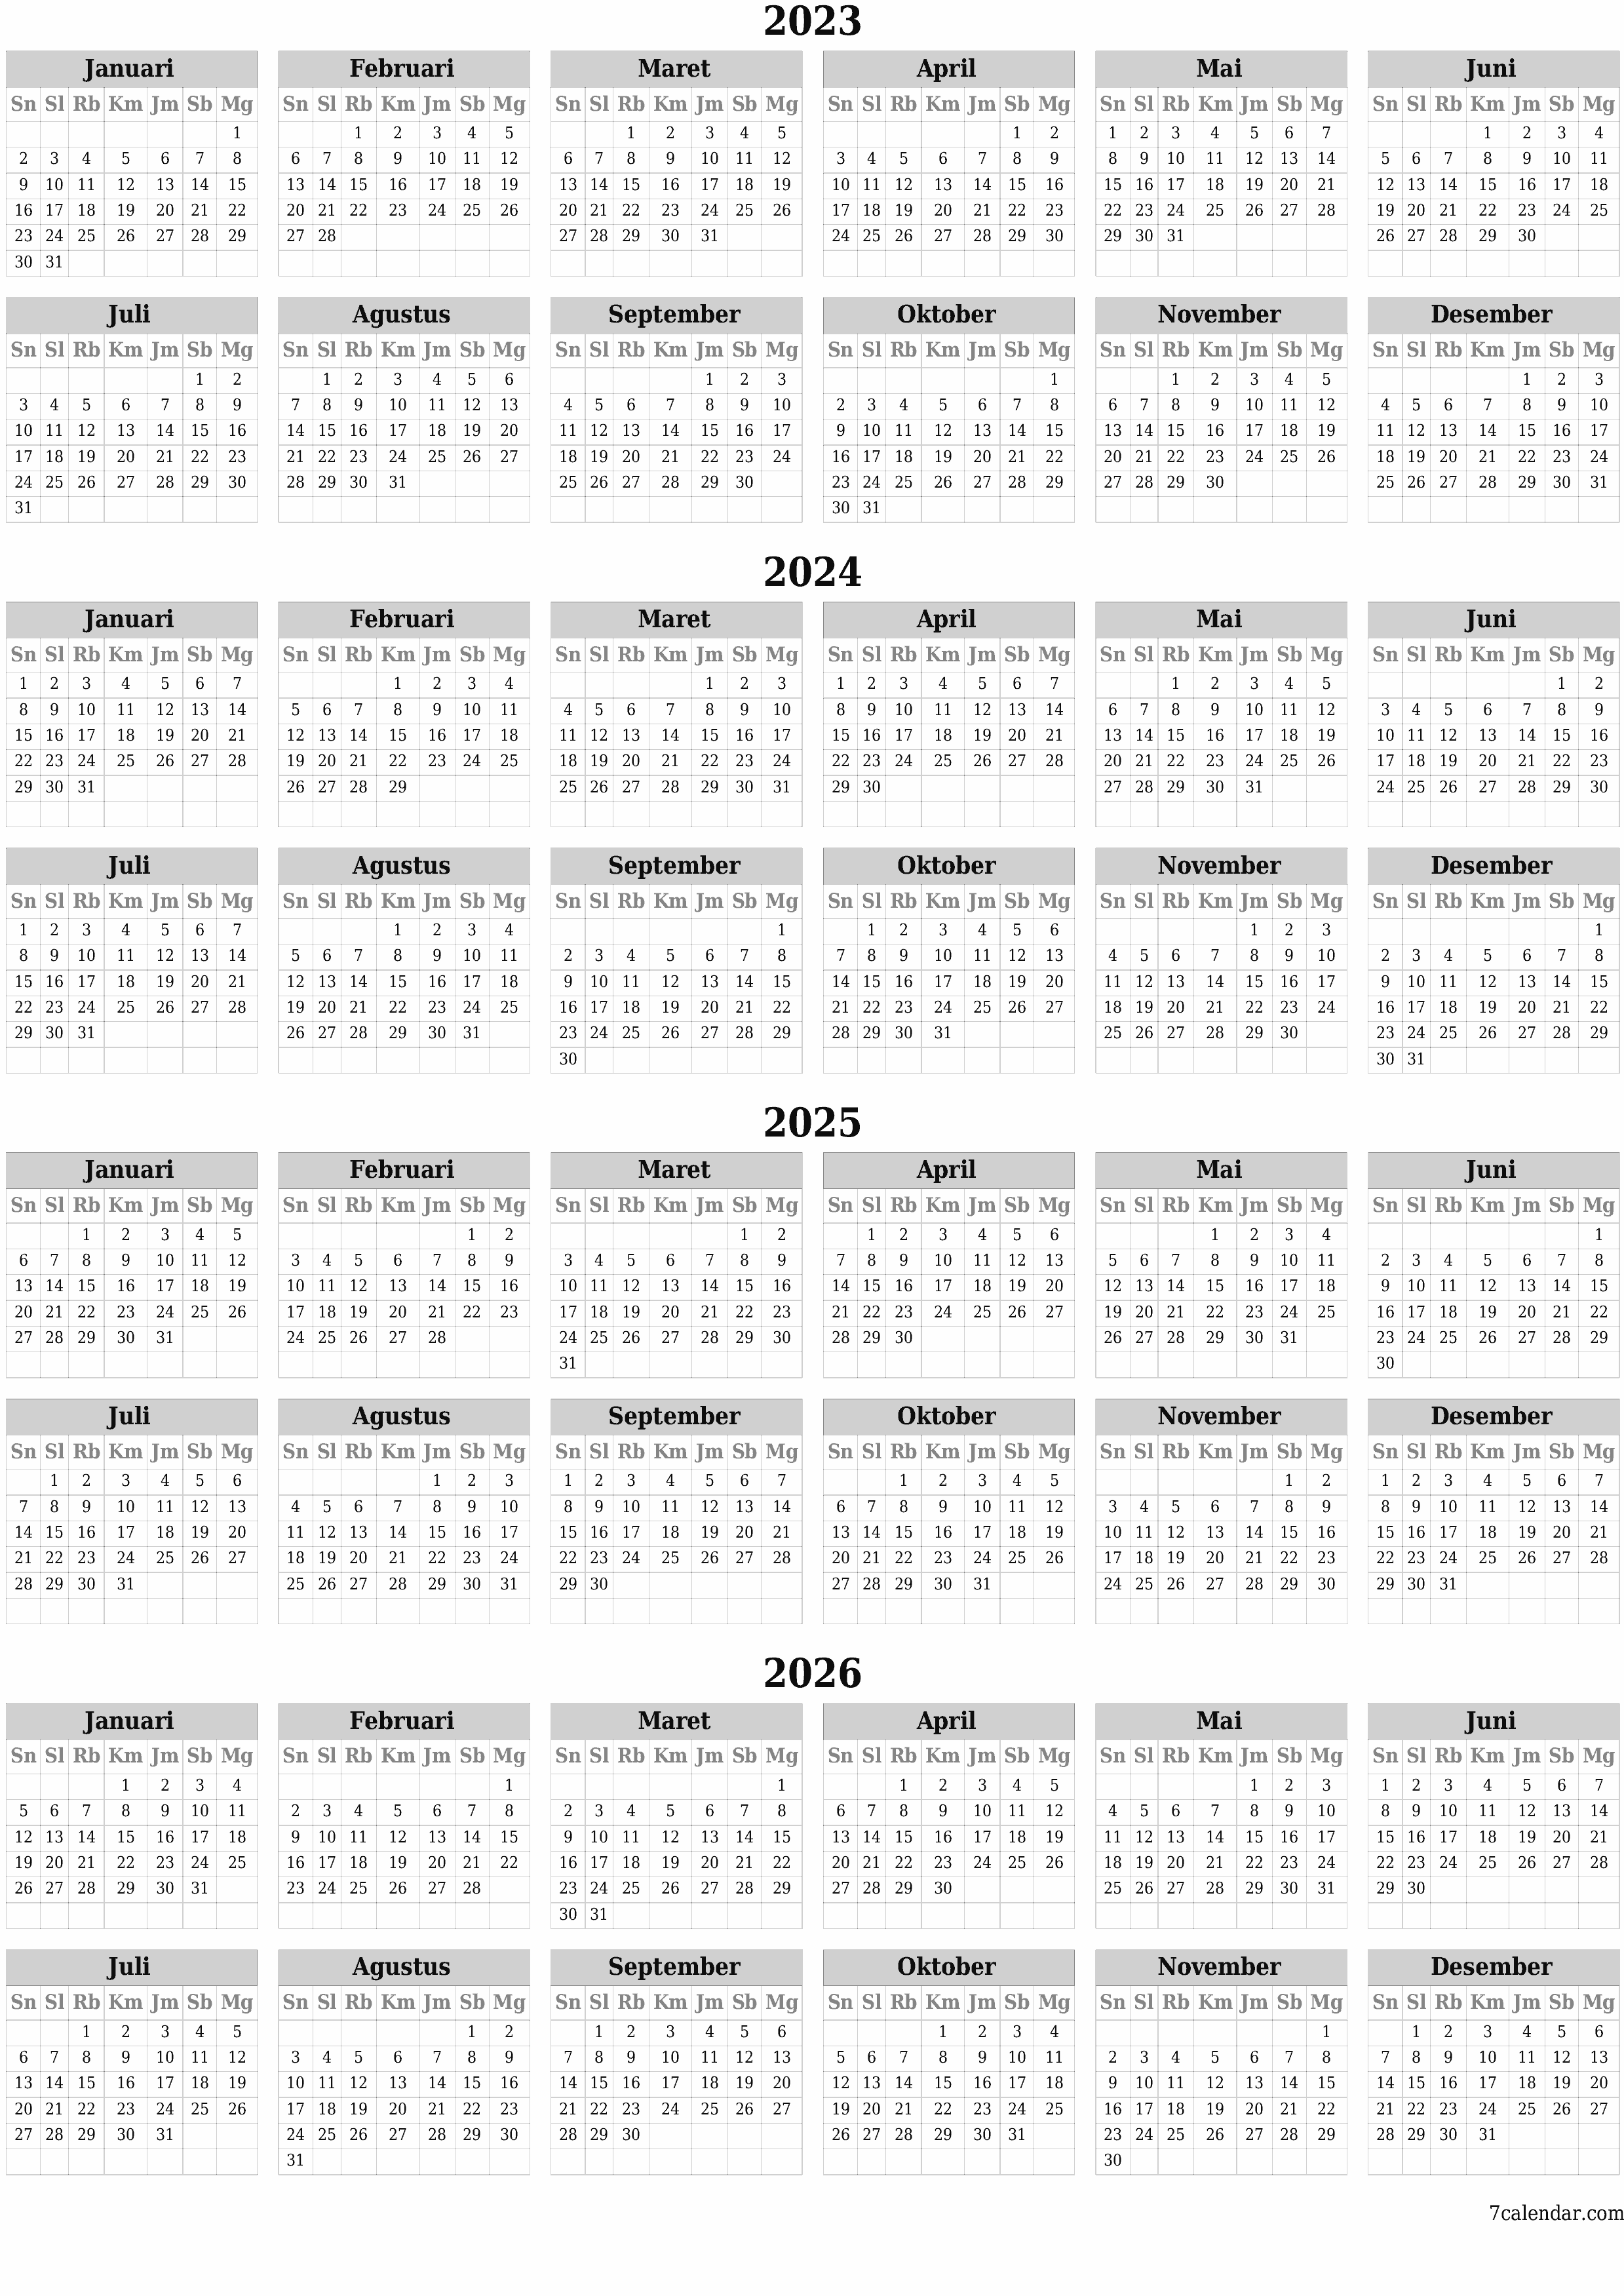 Kalender tahunan kosong untuk tahun 2023, 2024, 2025, 2026 simpan dan cetak ke PDF PNG Indonesian - 7calendar.com